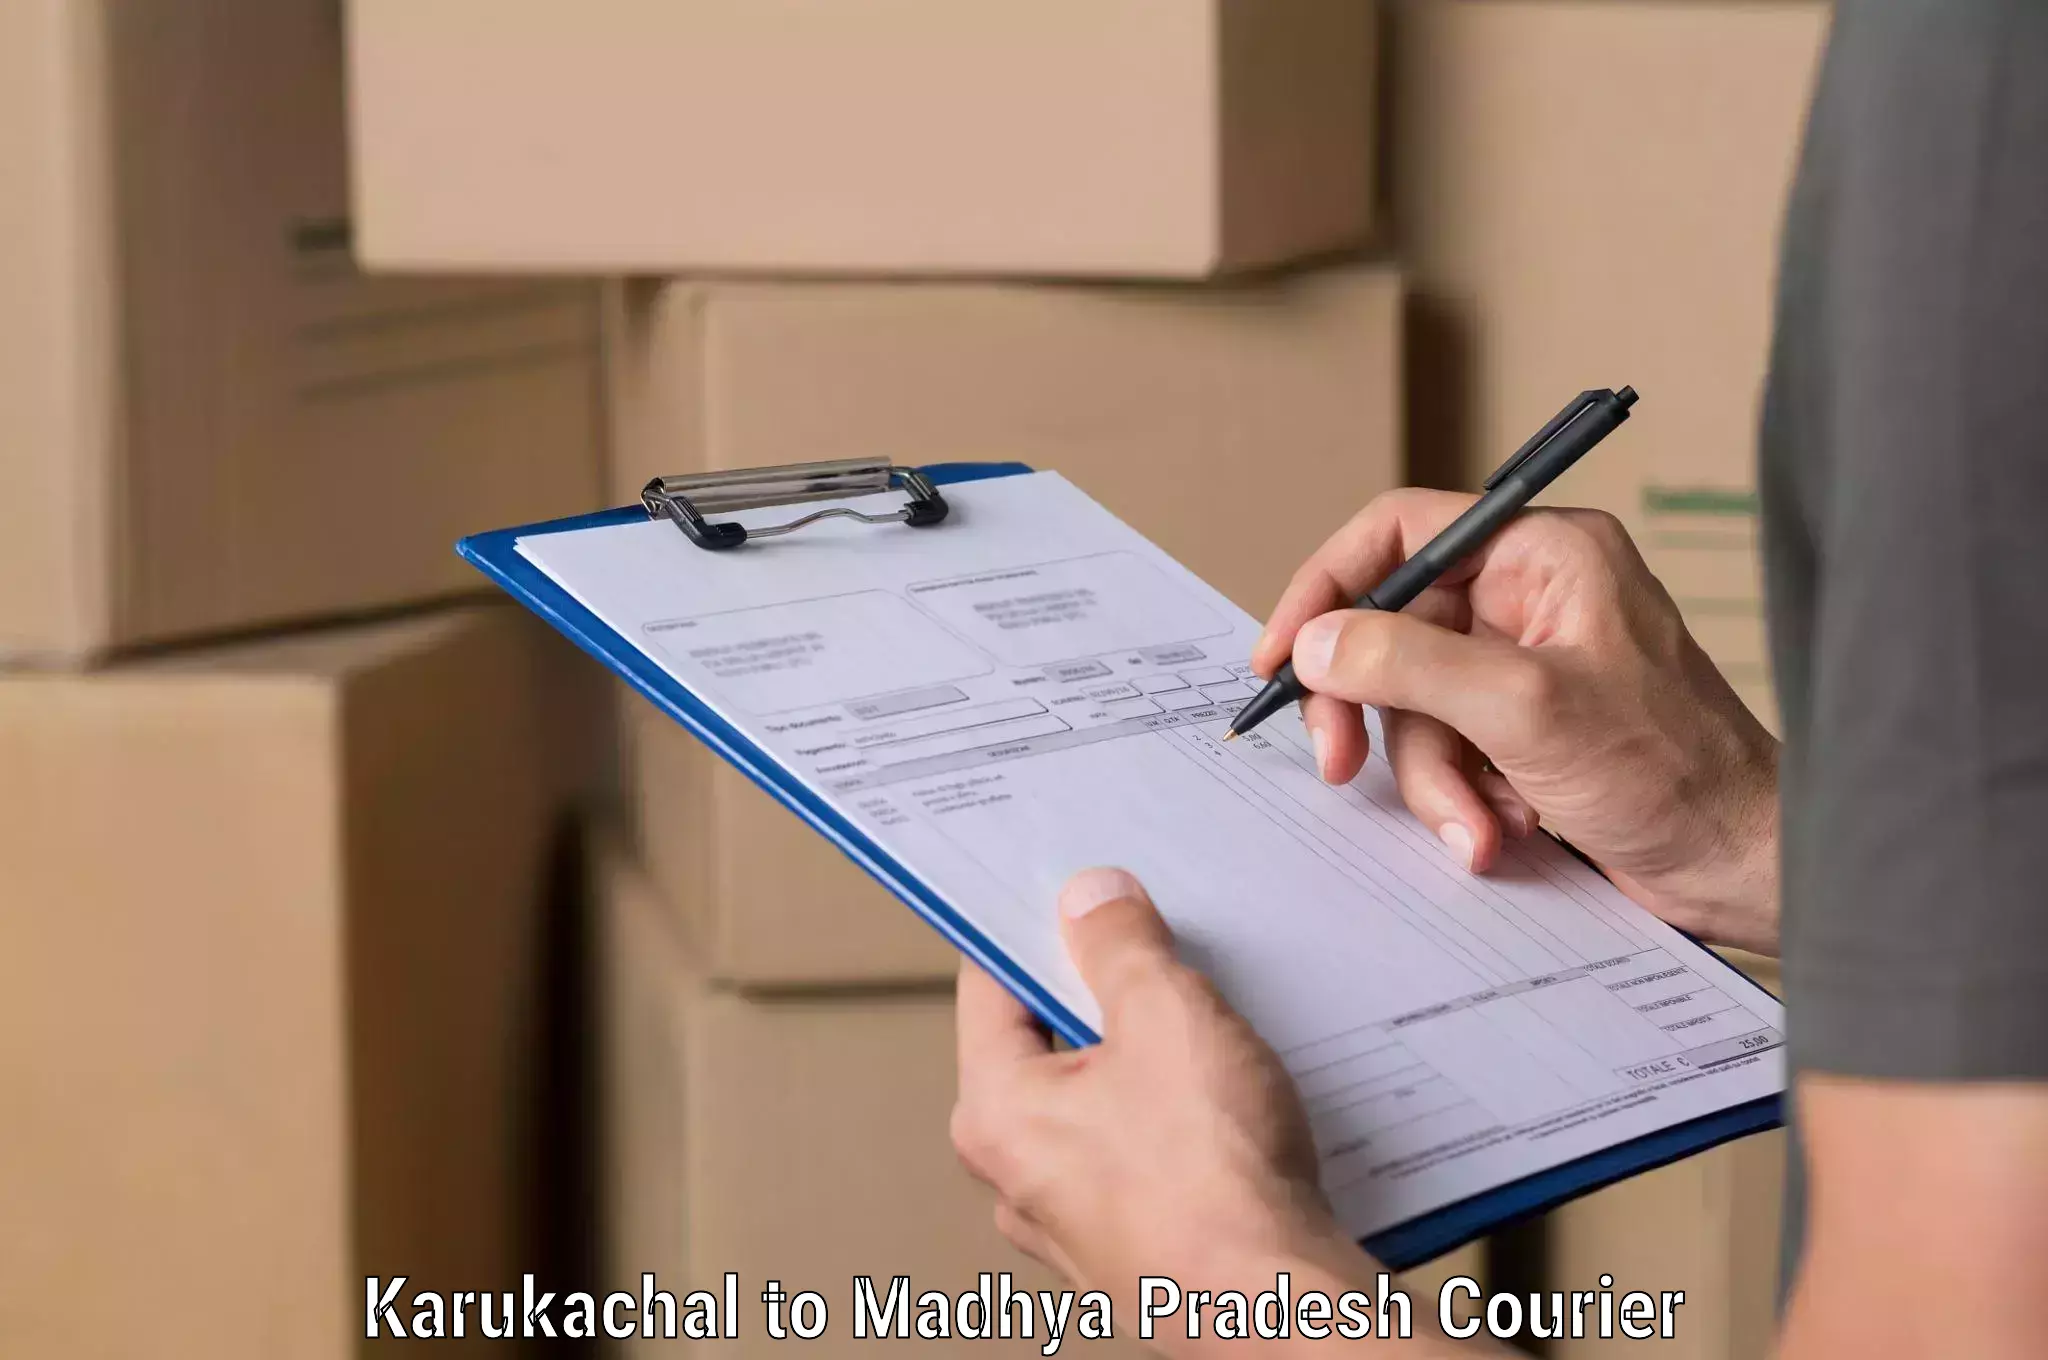 Comprehensive logistics in Karukachal to Lashkar